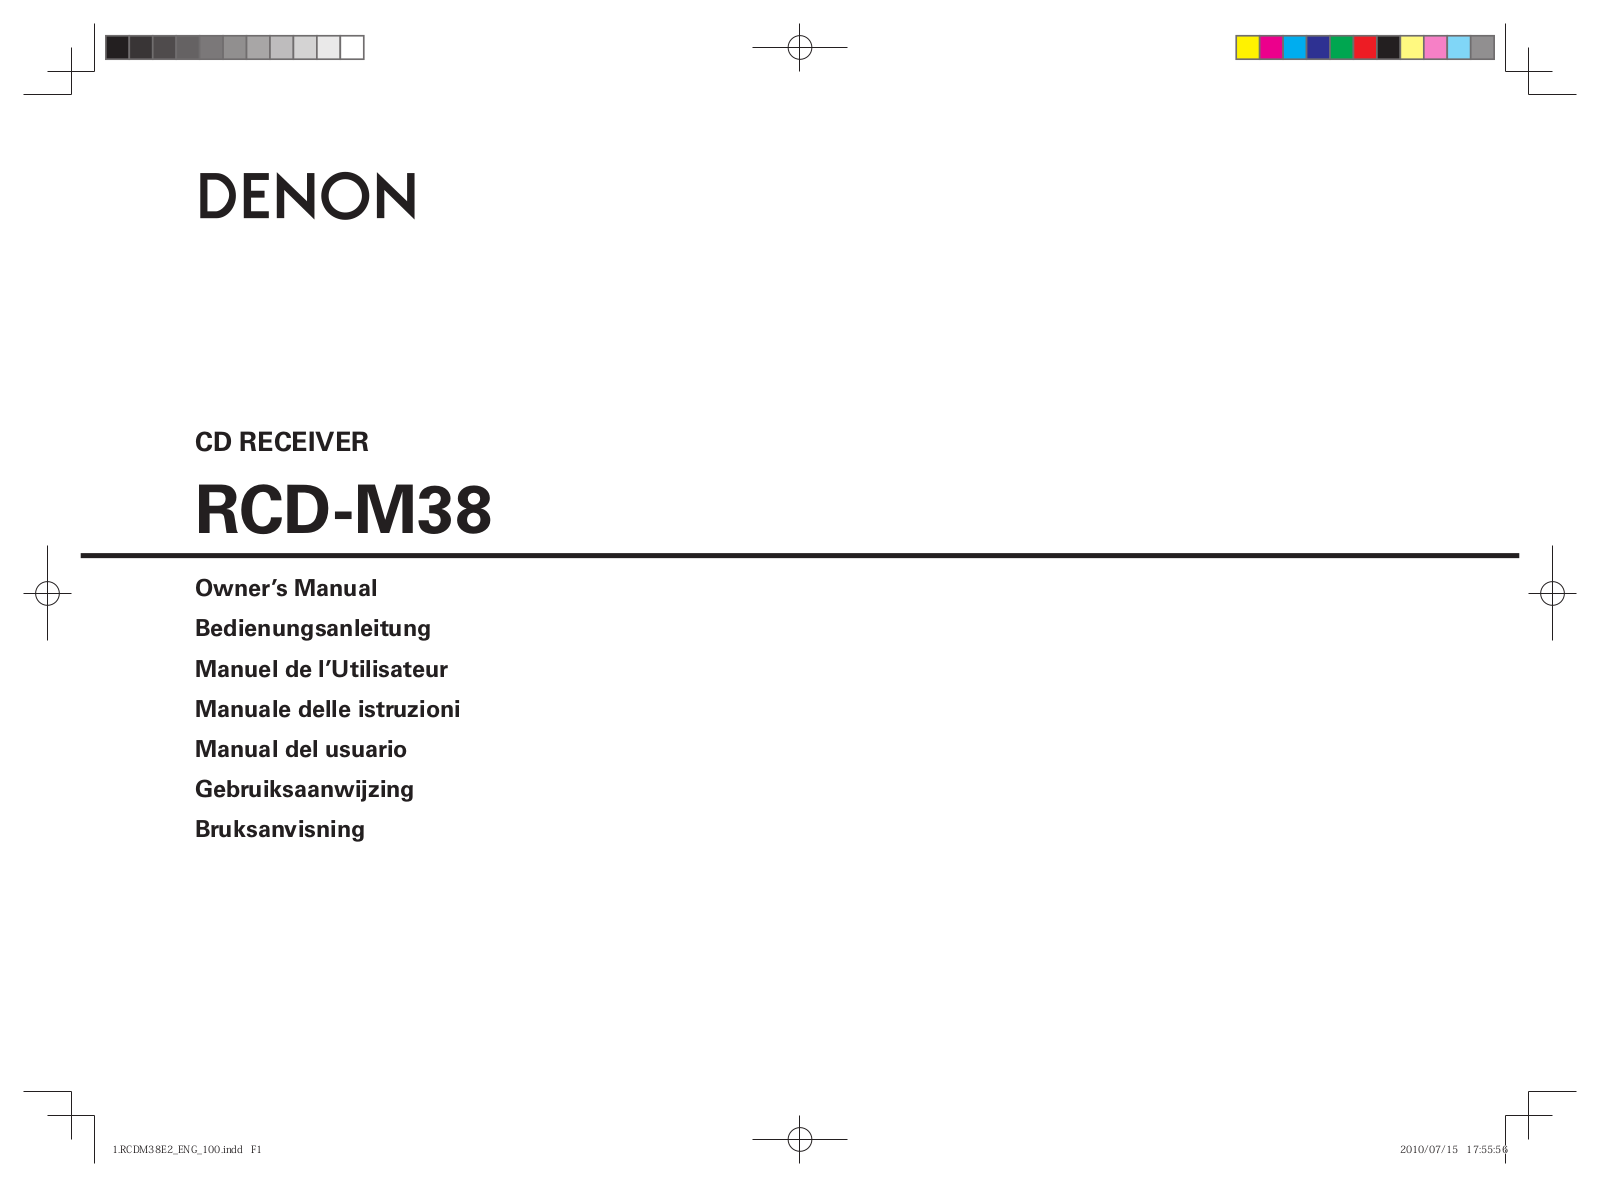 Denon RCD-M38 User Manual